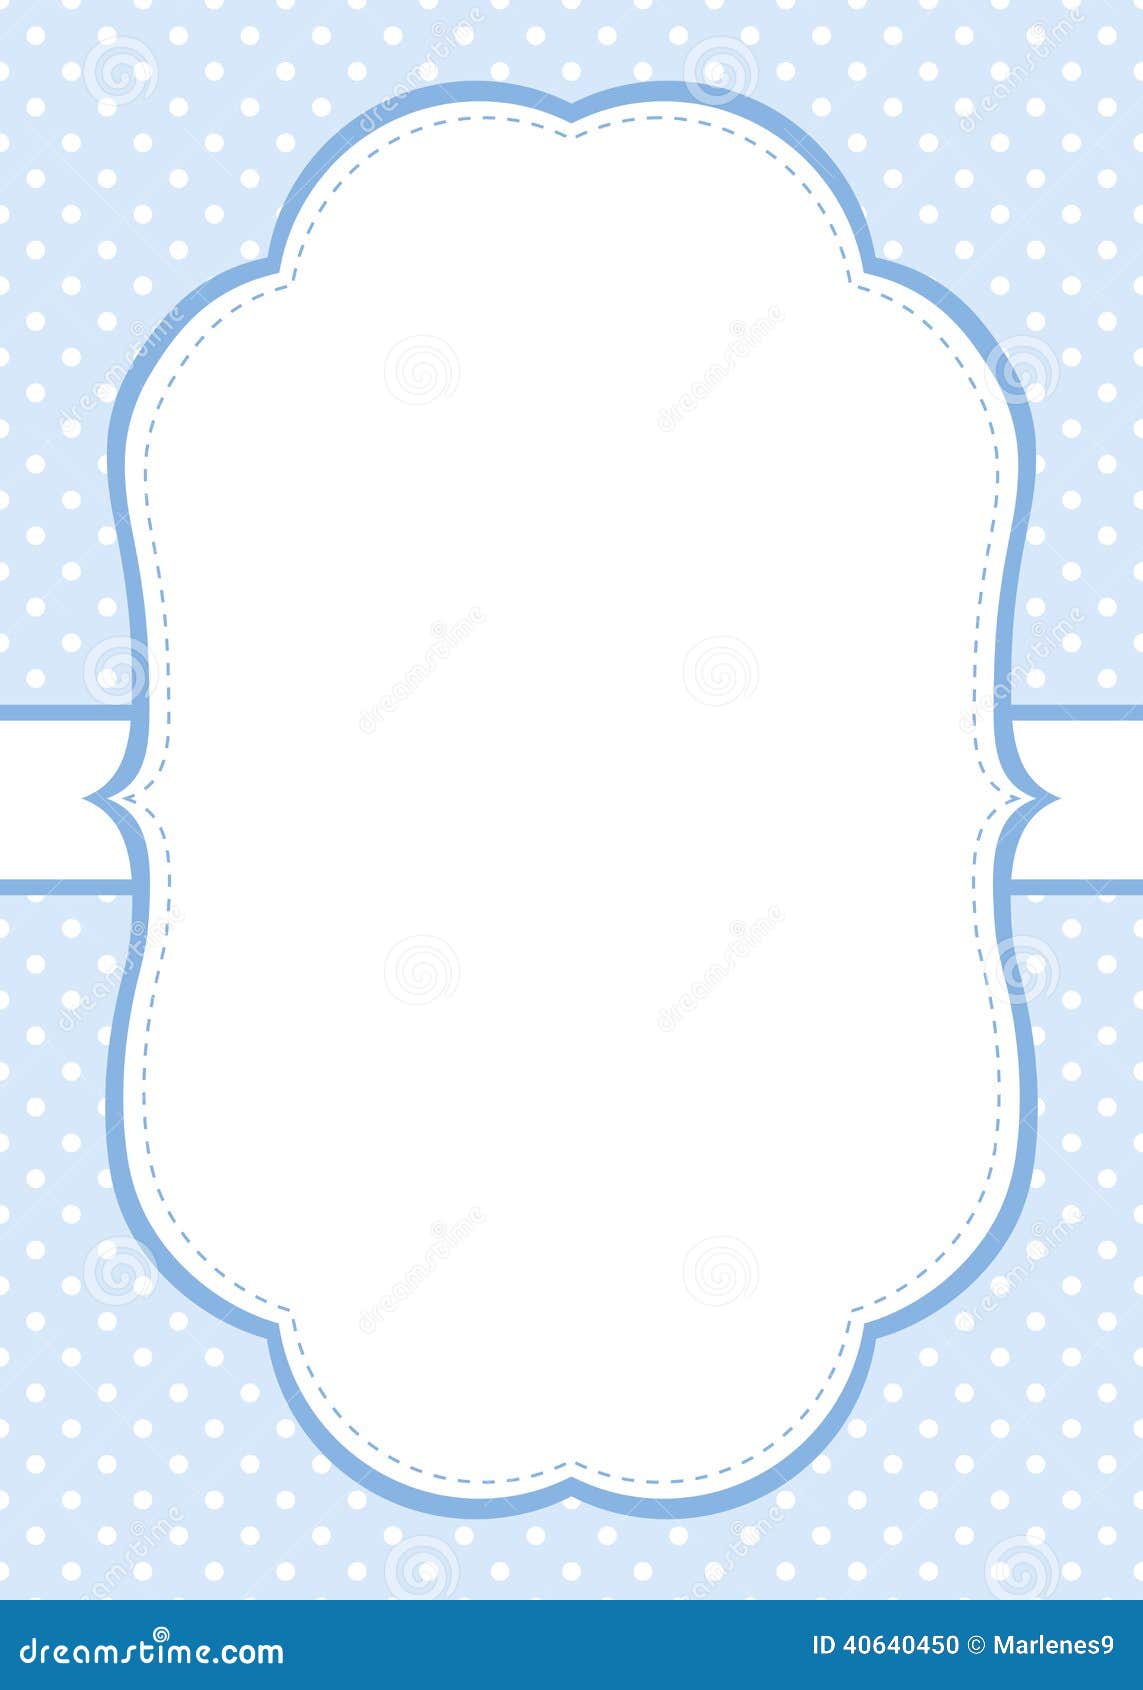 blue polka dot invitation template